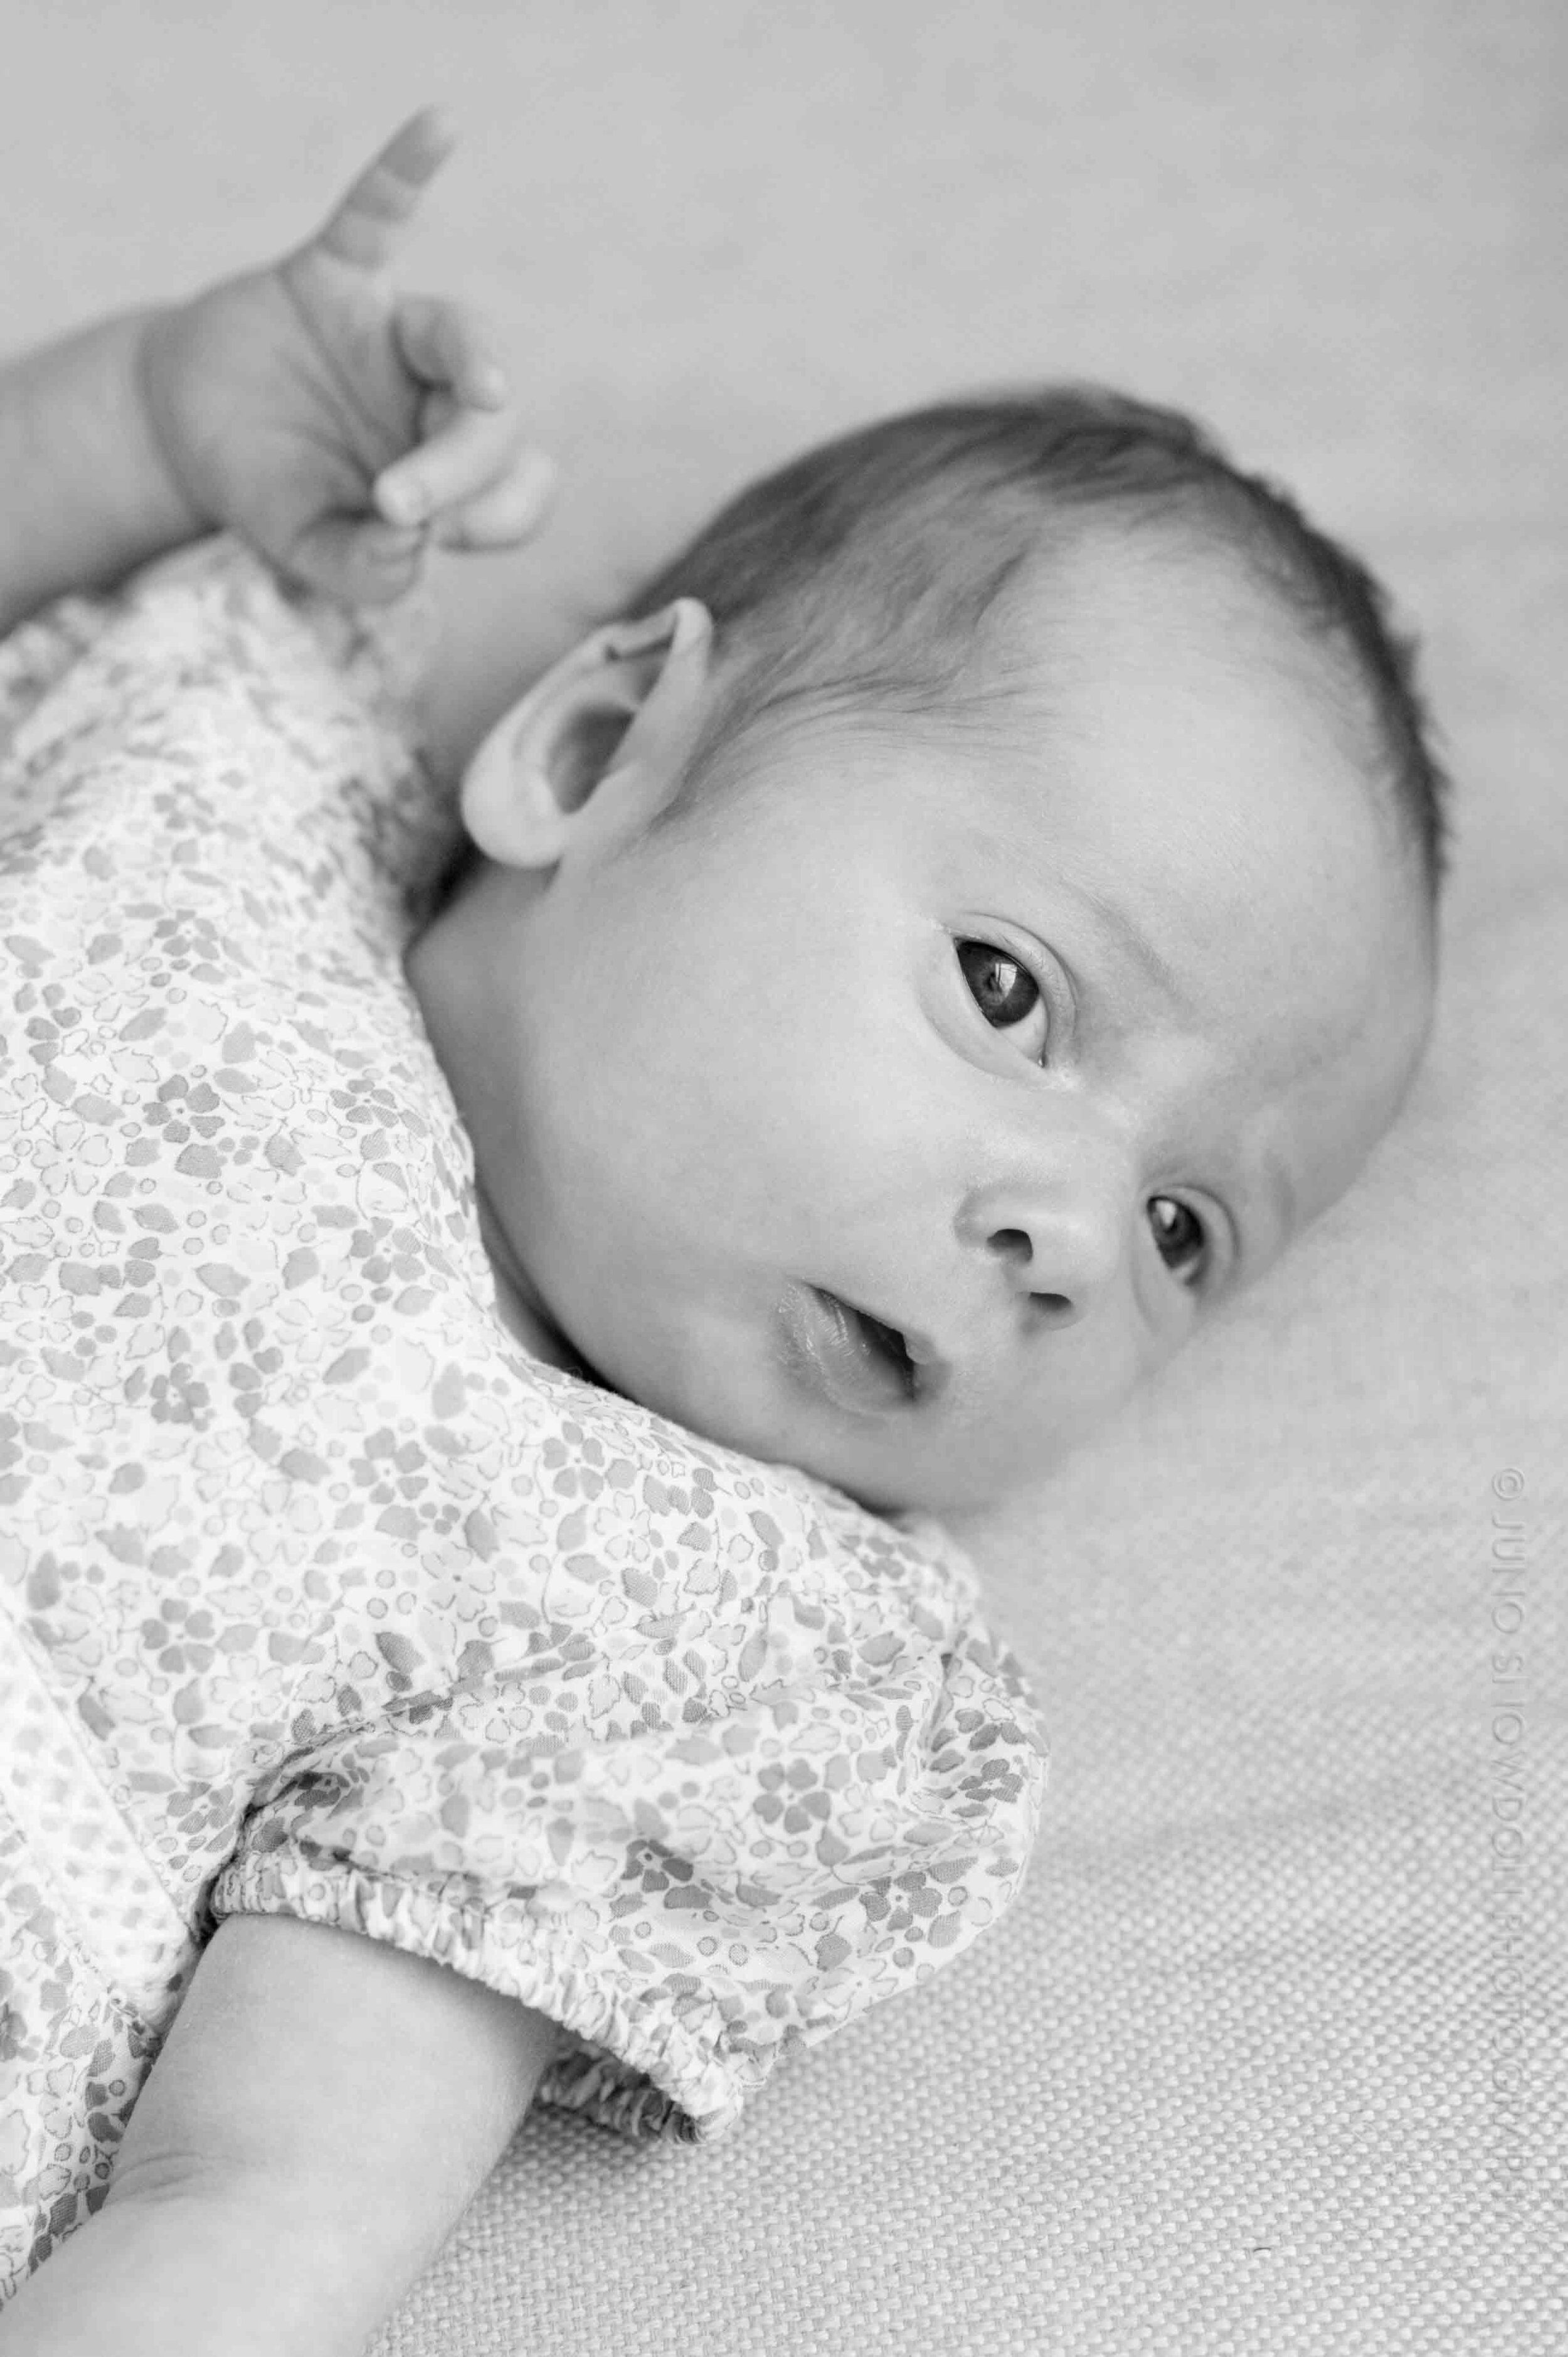 juno-snowdon-photography-newborn-family-portraits-london-2276.jpg